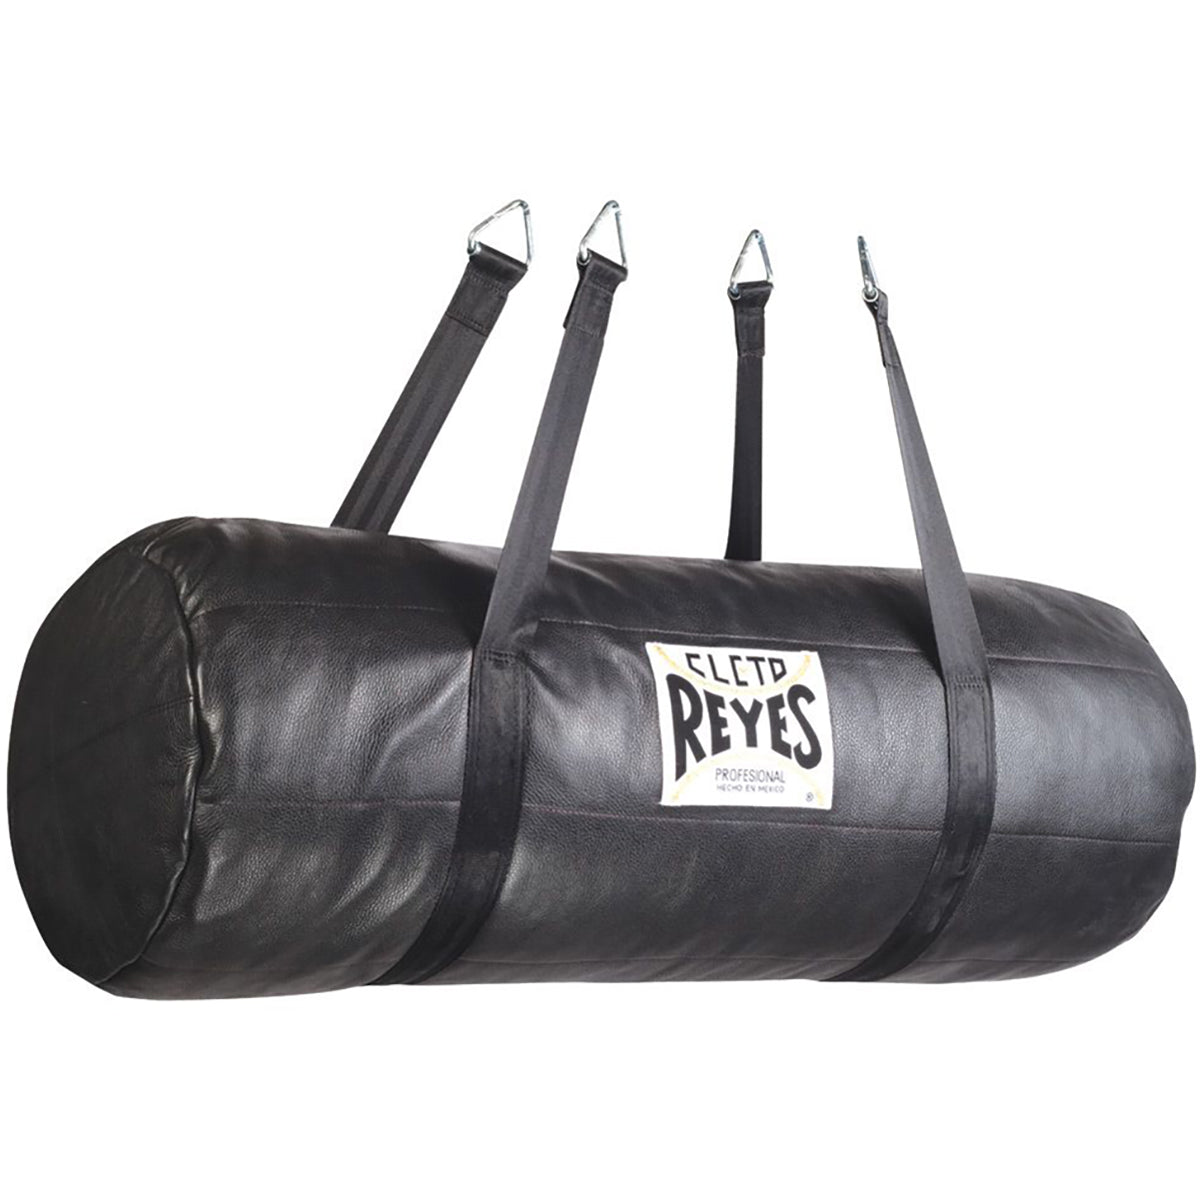 Cleto Reyes Uppercut Cowhide Leather Filled Training Bag - Large - Black Cleto Reyes